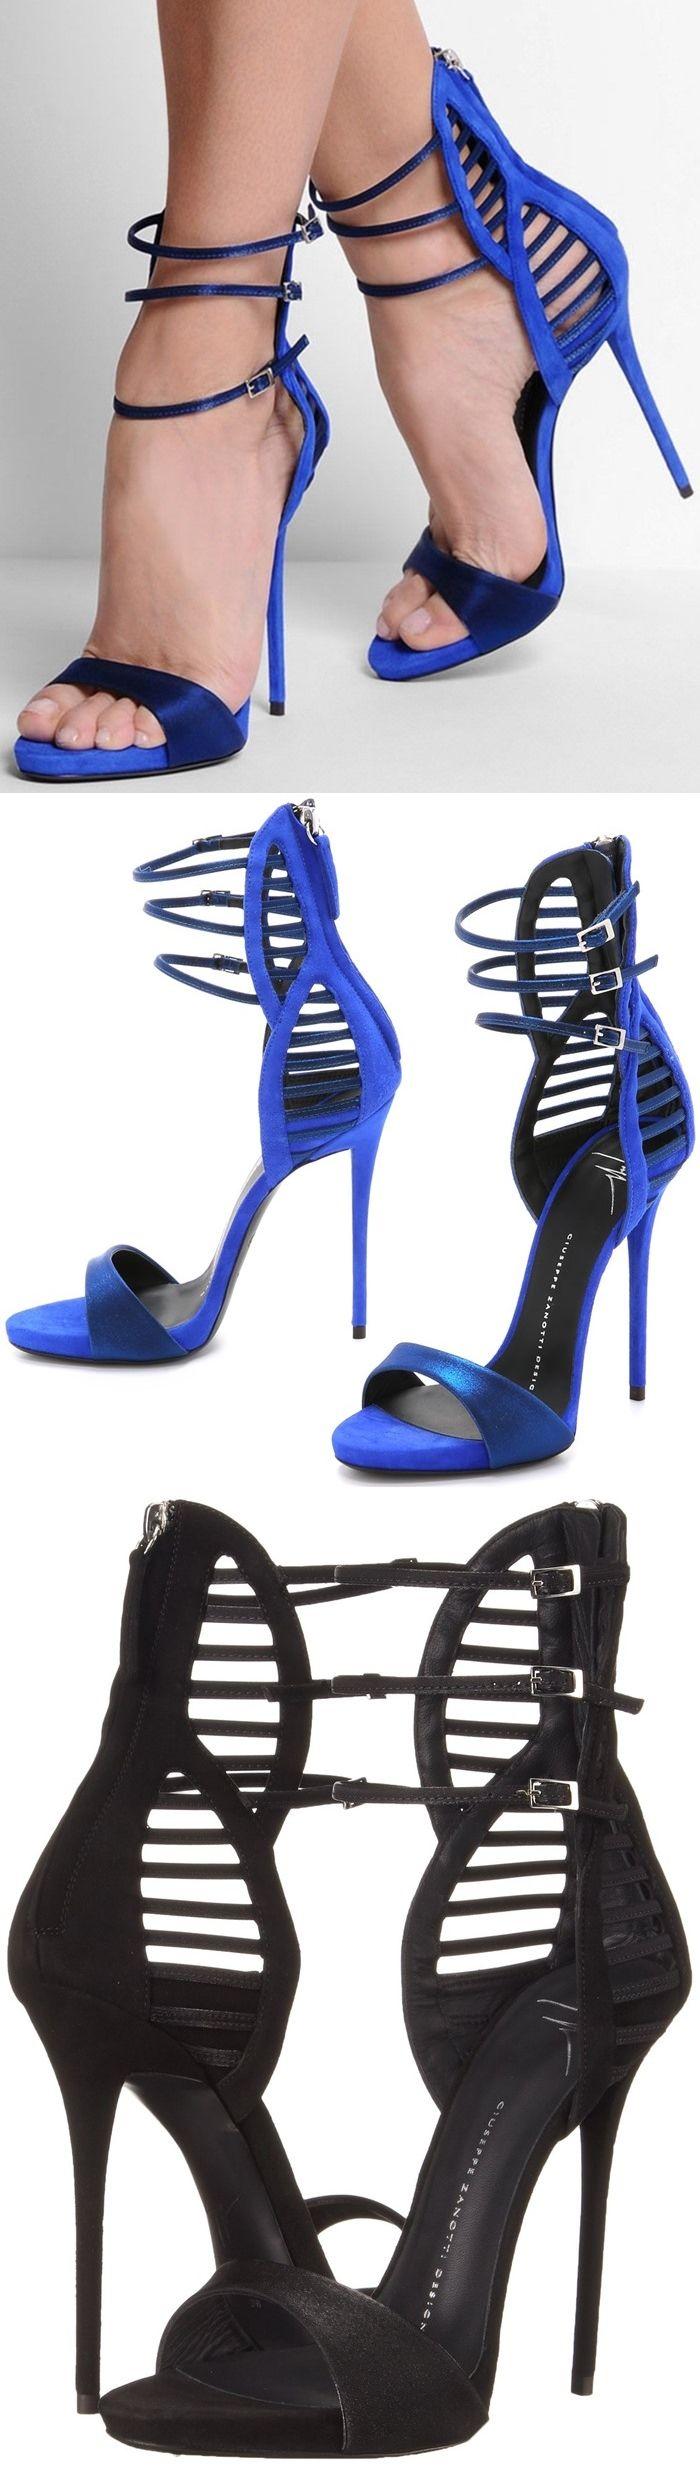 Hochzeit - 2 New Heels From Legendary Shoe Designer Giuseppe Zanotti